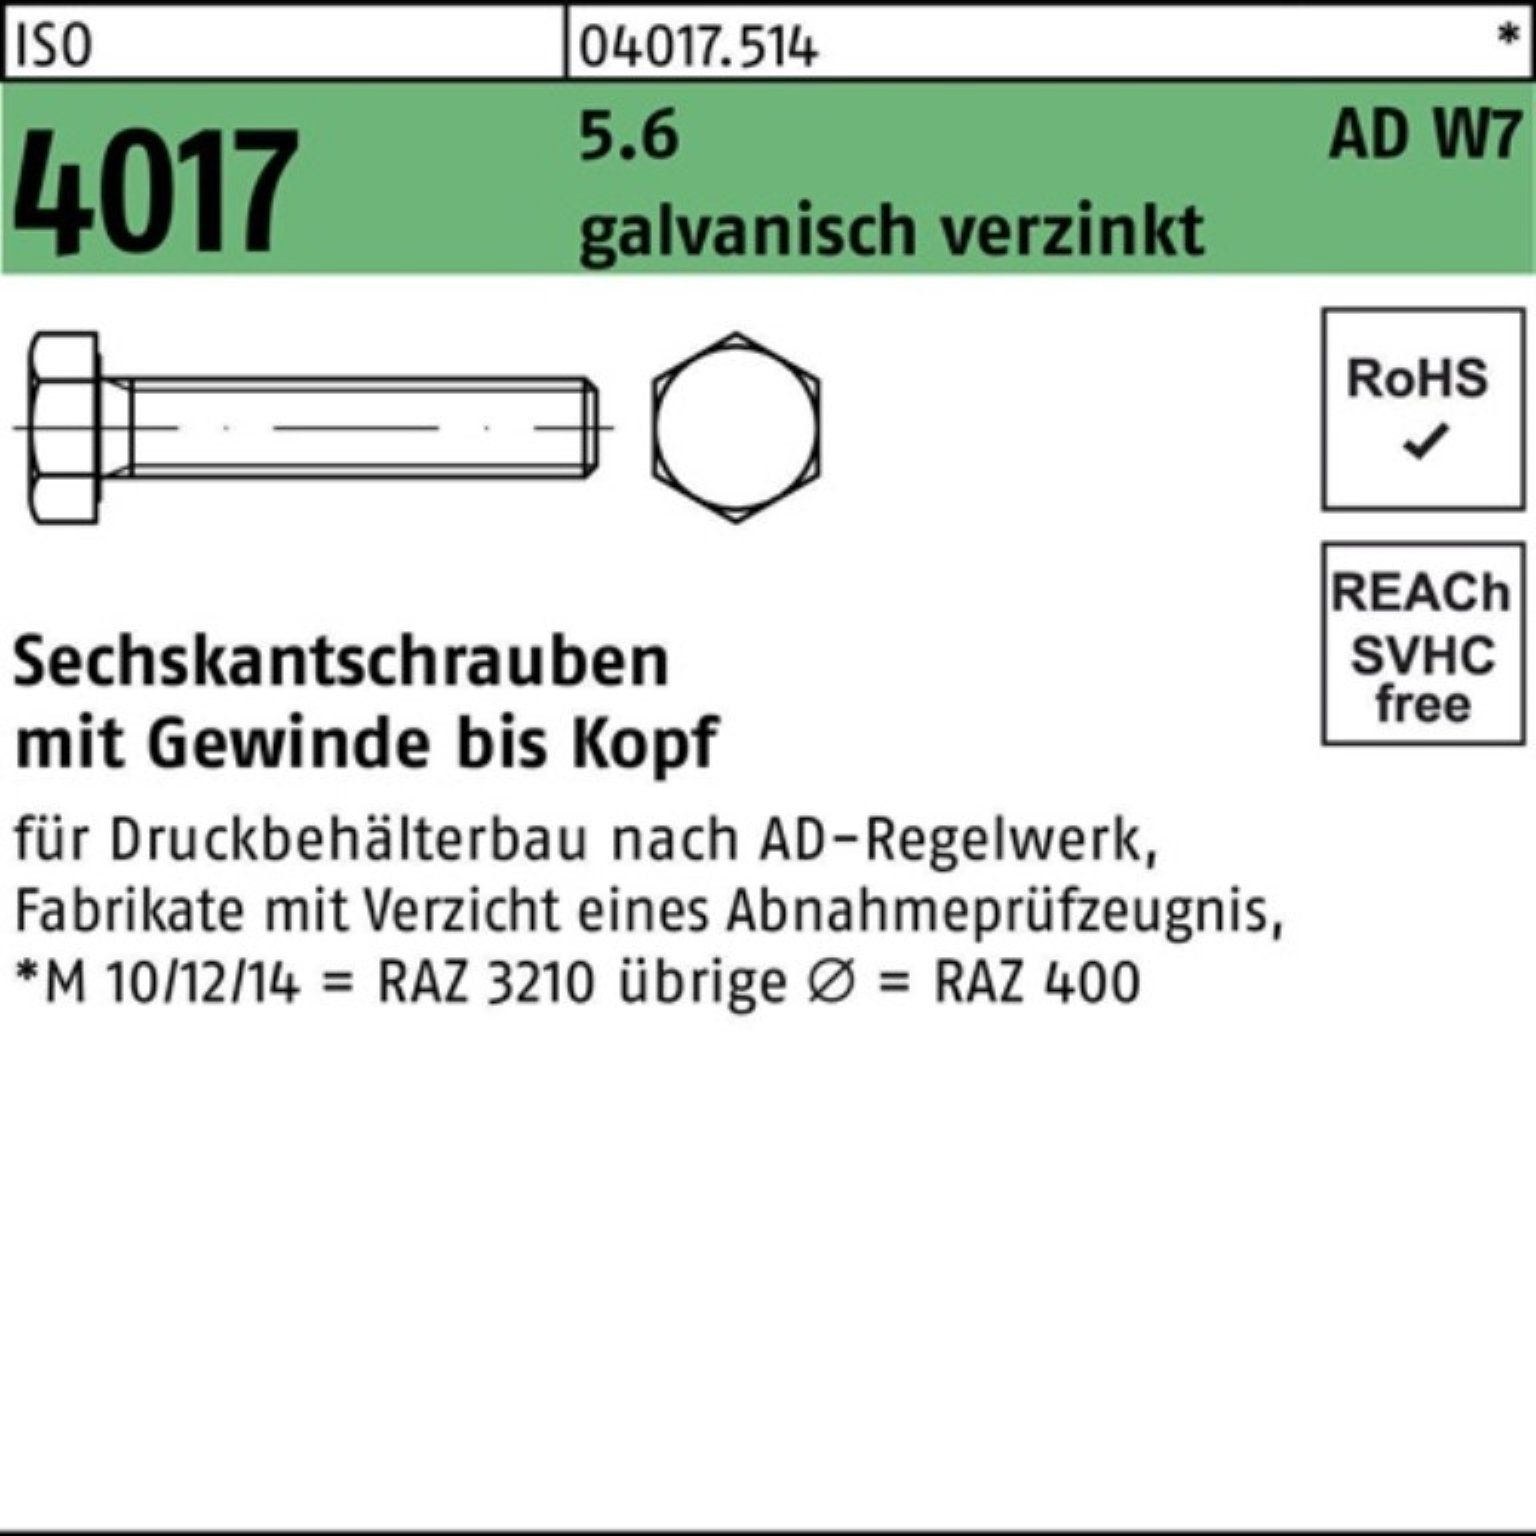 4017 AD Sechskantschraube Bufab Pack galv.verz. W7 Sechskantschraube 5.6 ISO 100 VG 100er M12x